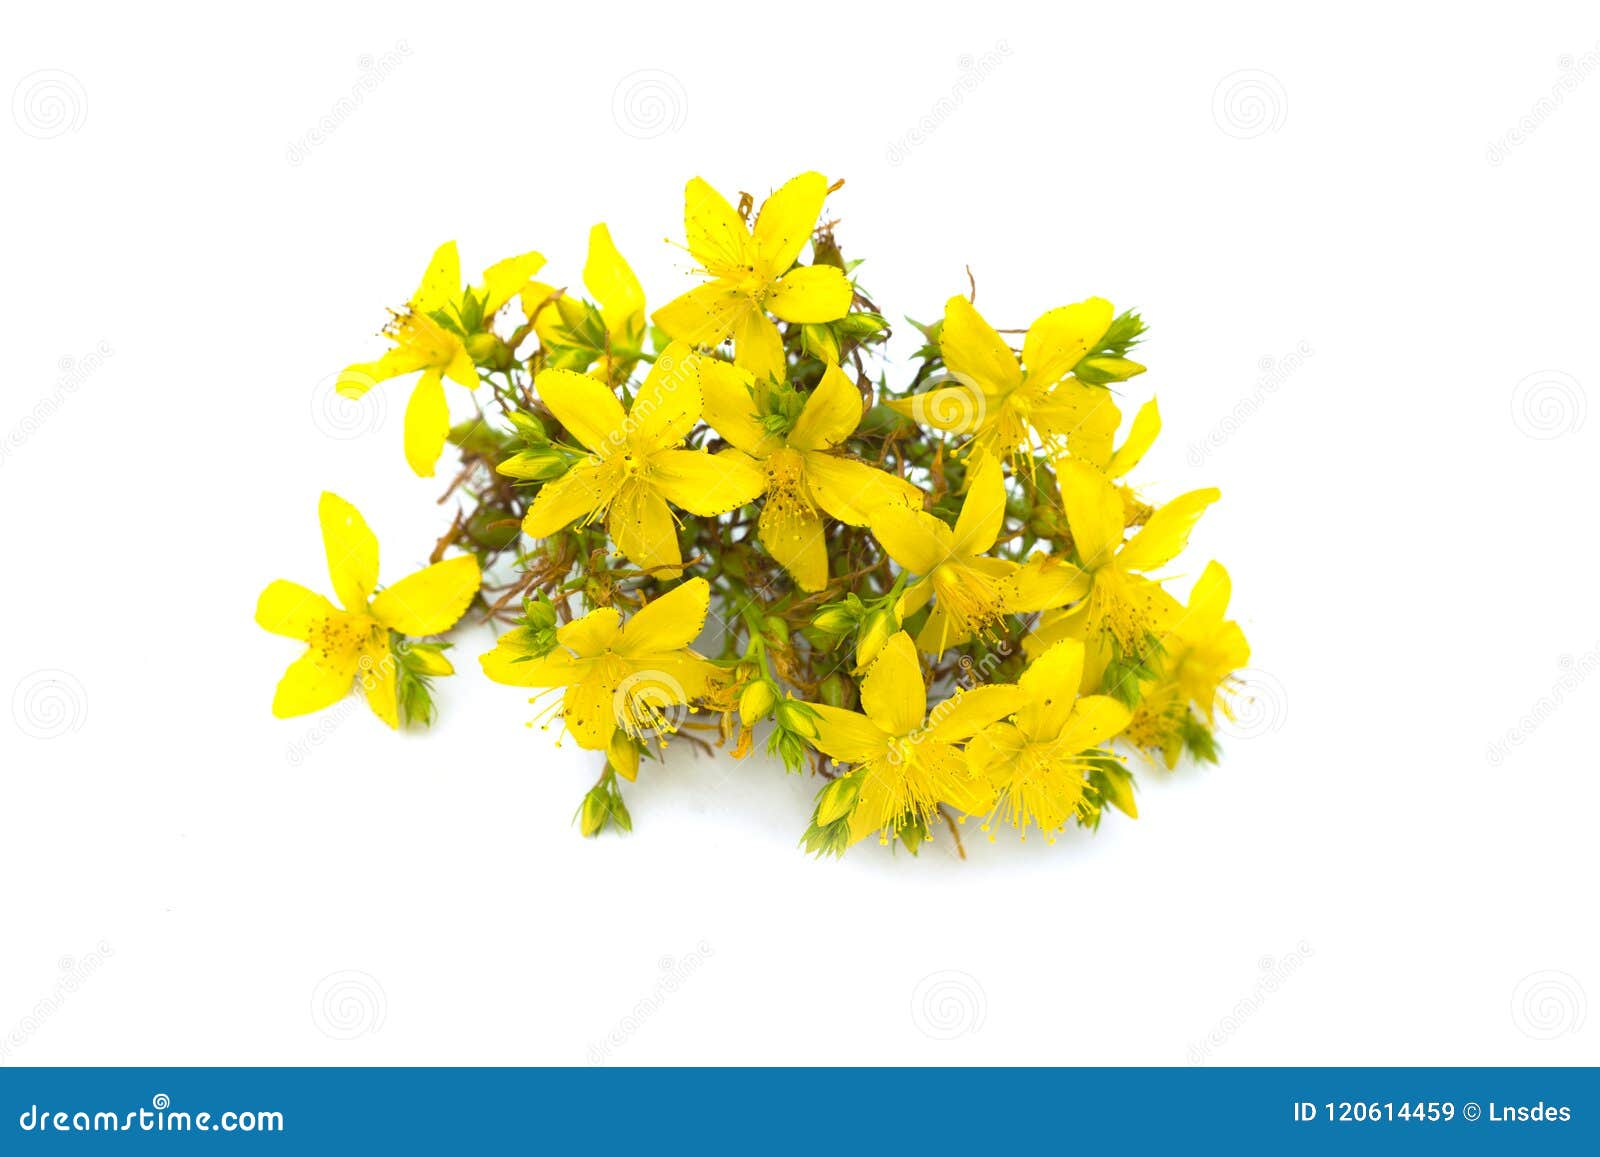 st john`s wort, yellow blossom of tutsan bush, herbal medicinal hypericum perforatum plant,  on white background